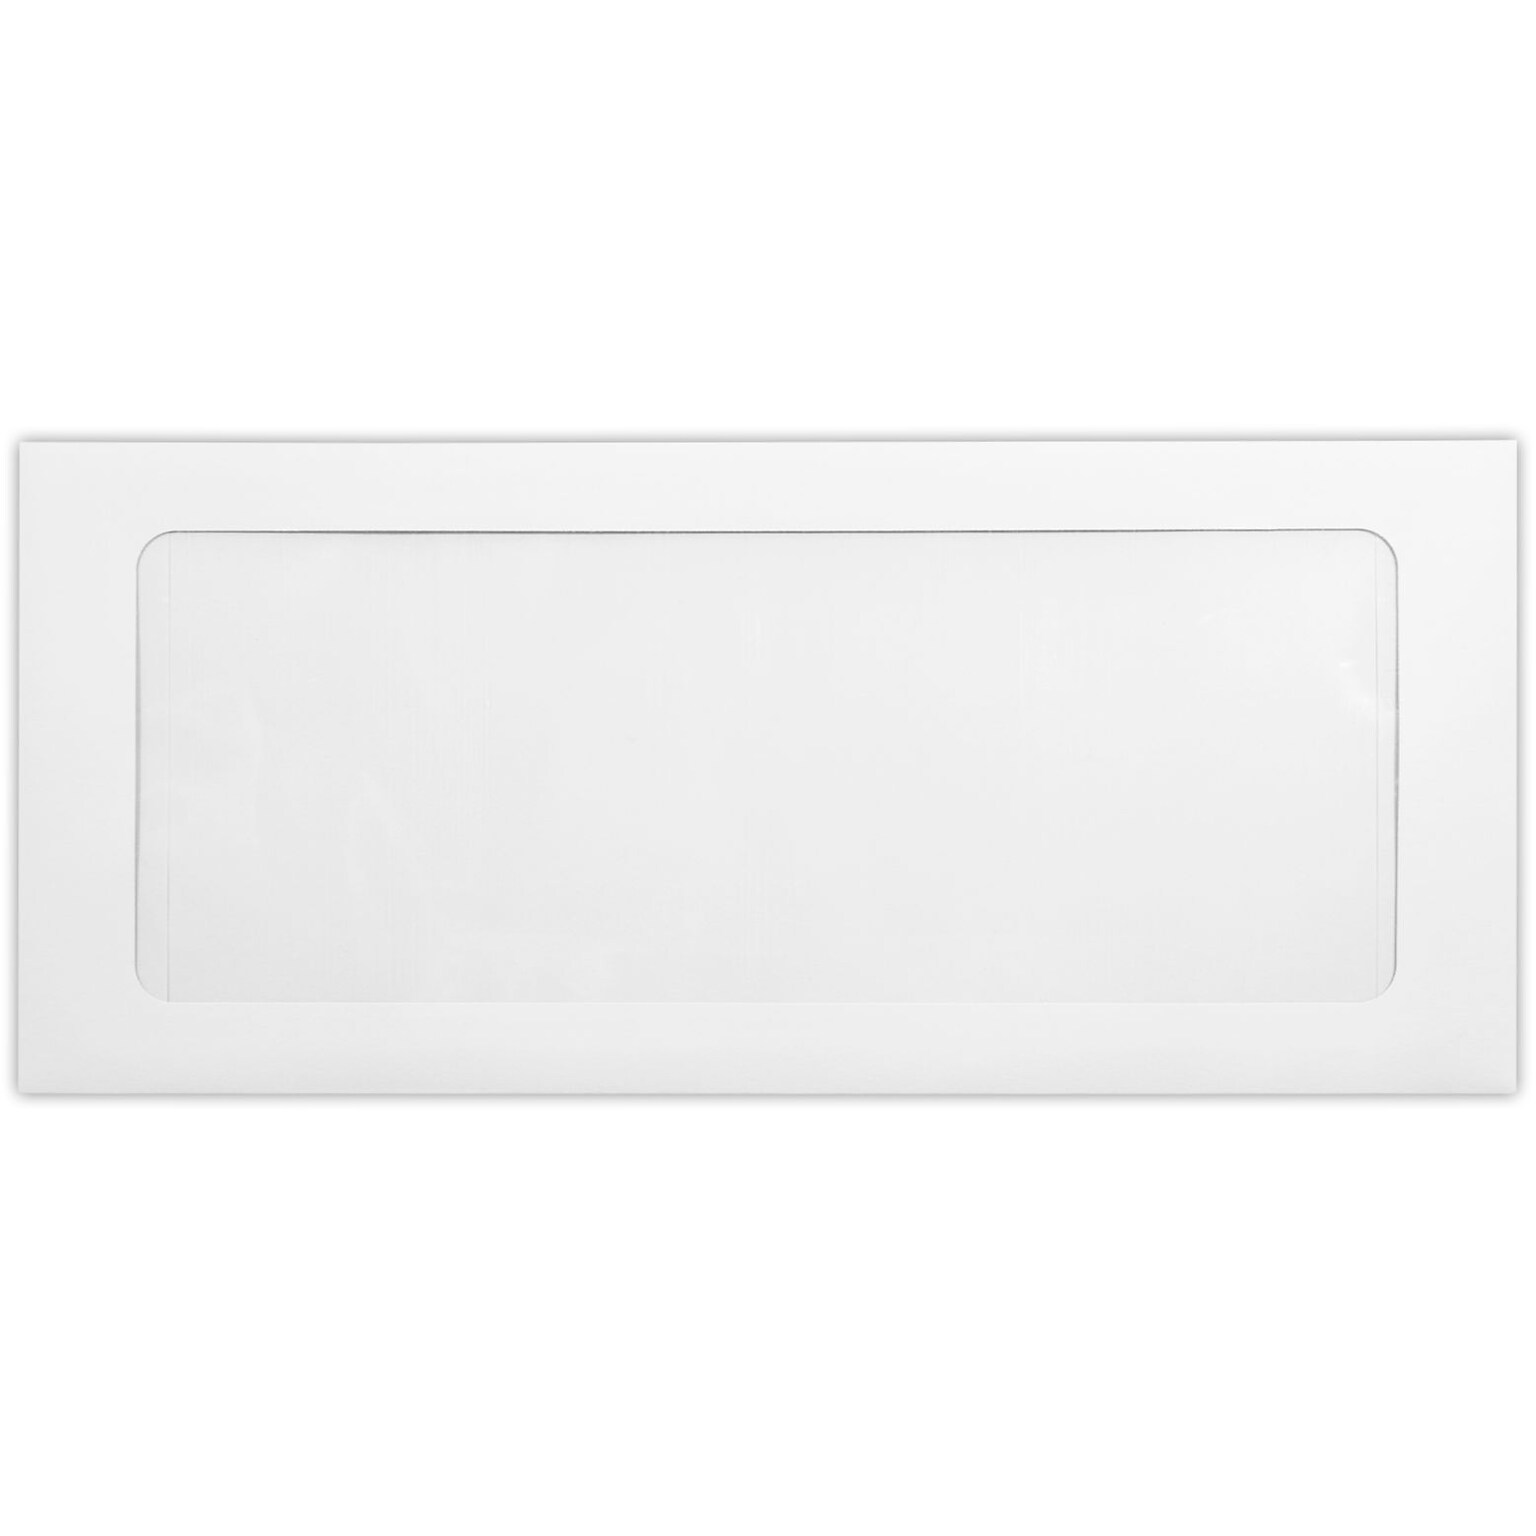 LUX #10 Full Face Window Envelopes (4 1/8 x 9 1/2) 250/Pack, 80lb. White (FFW-10-80W-250)